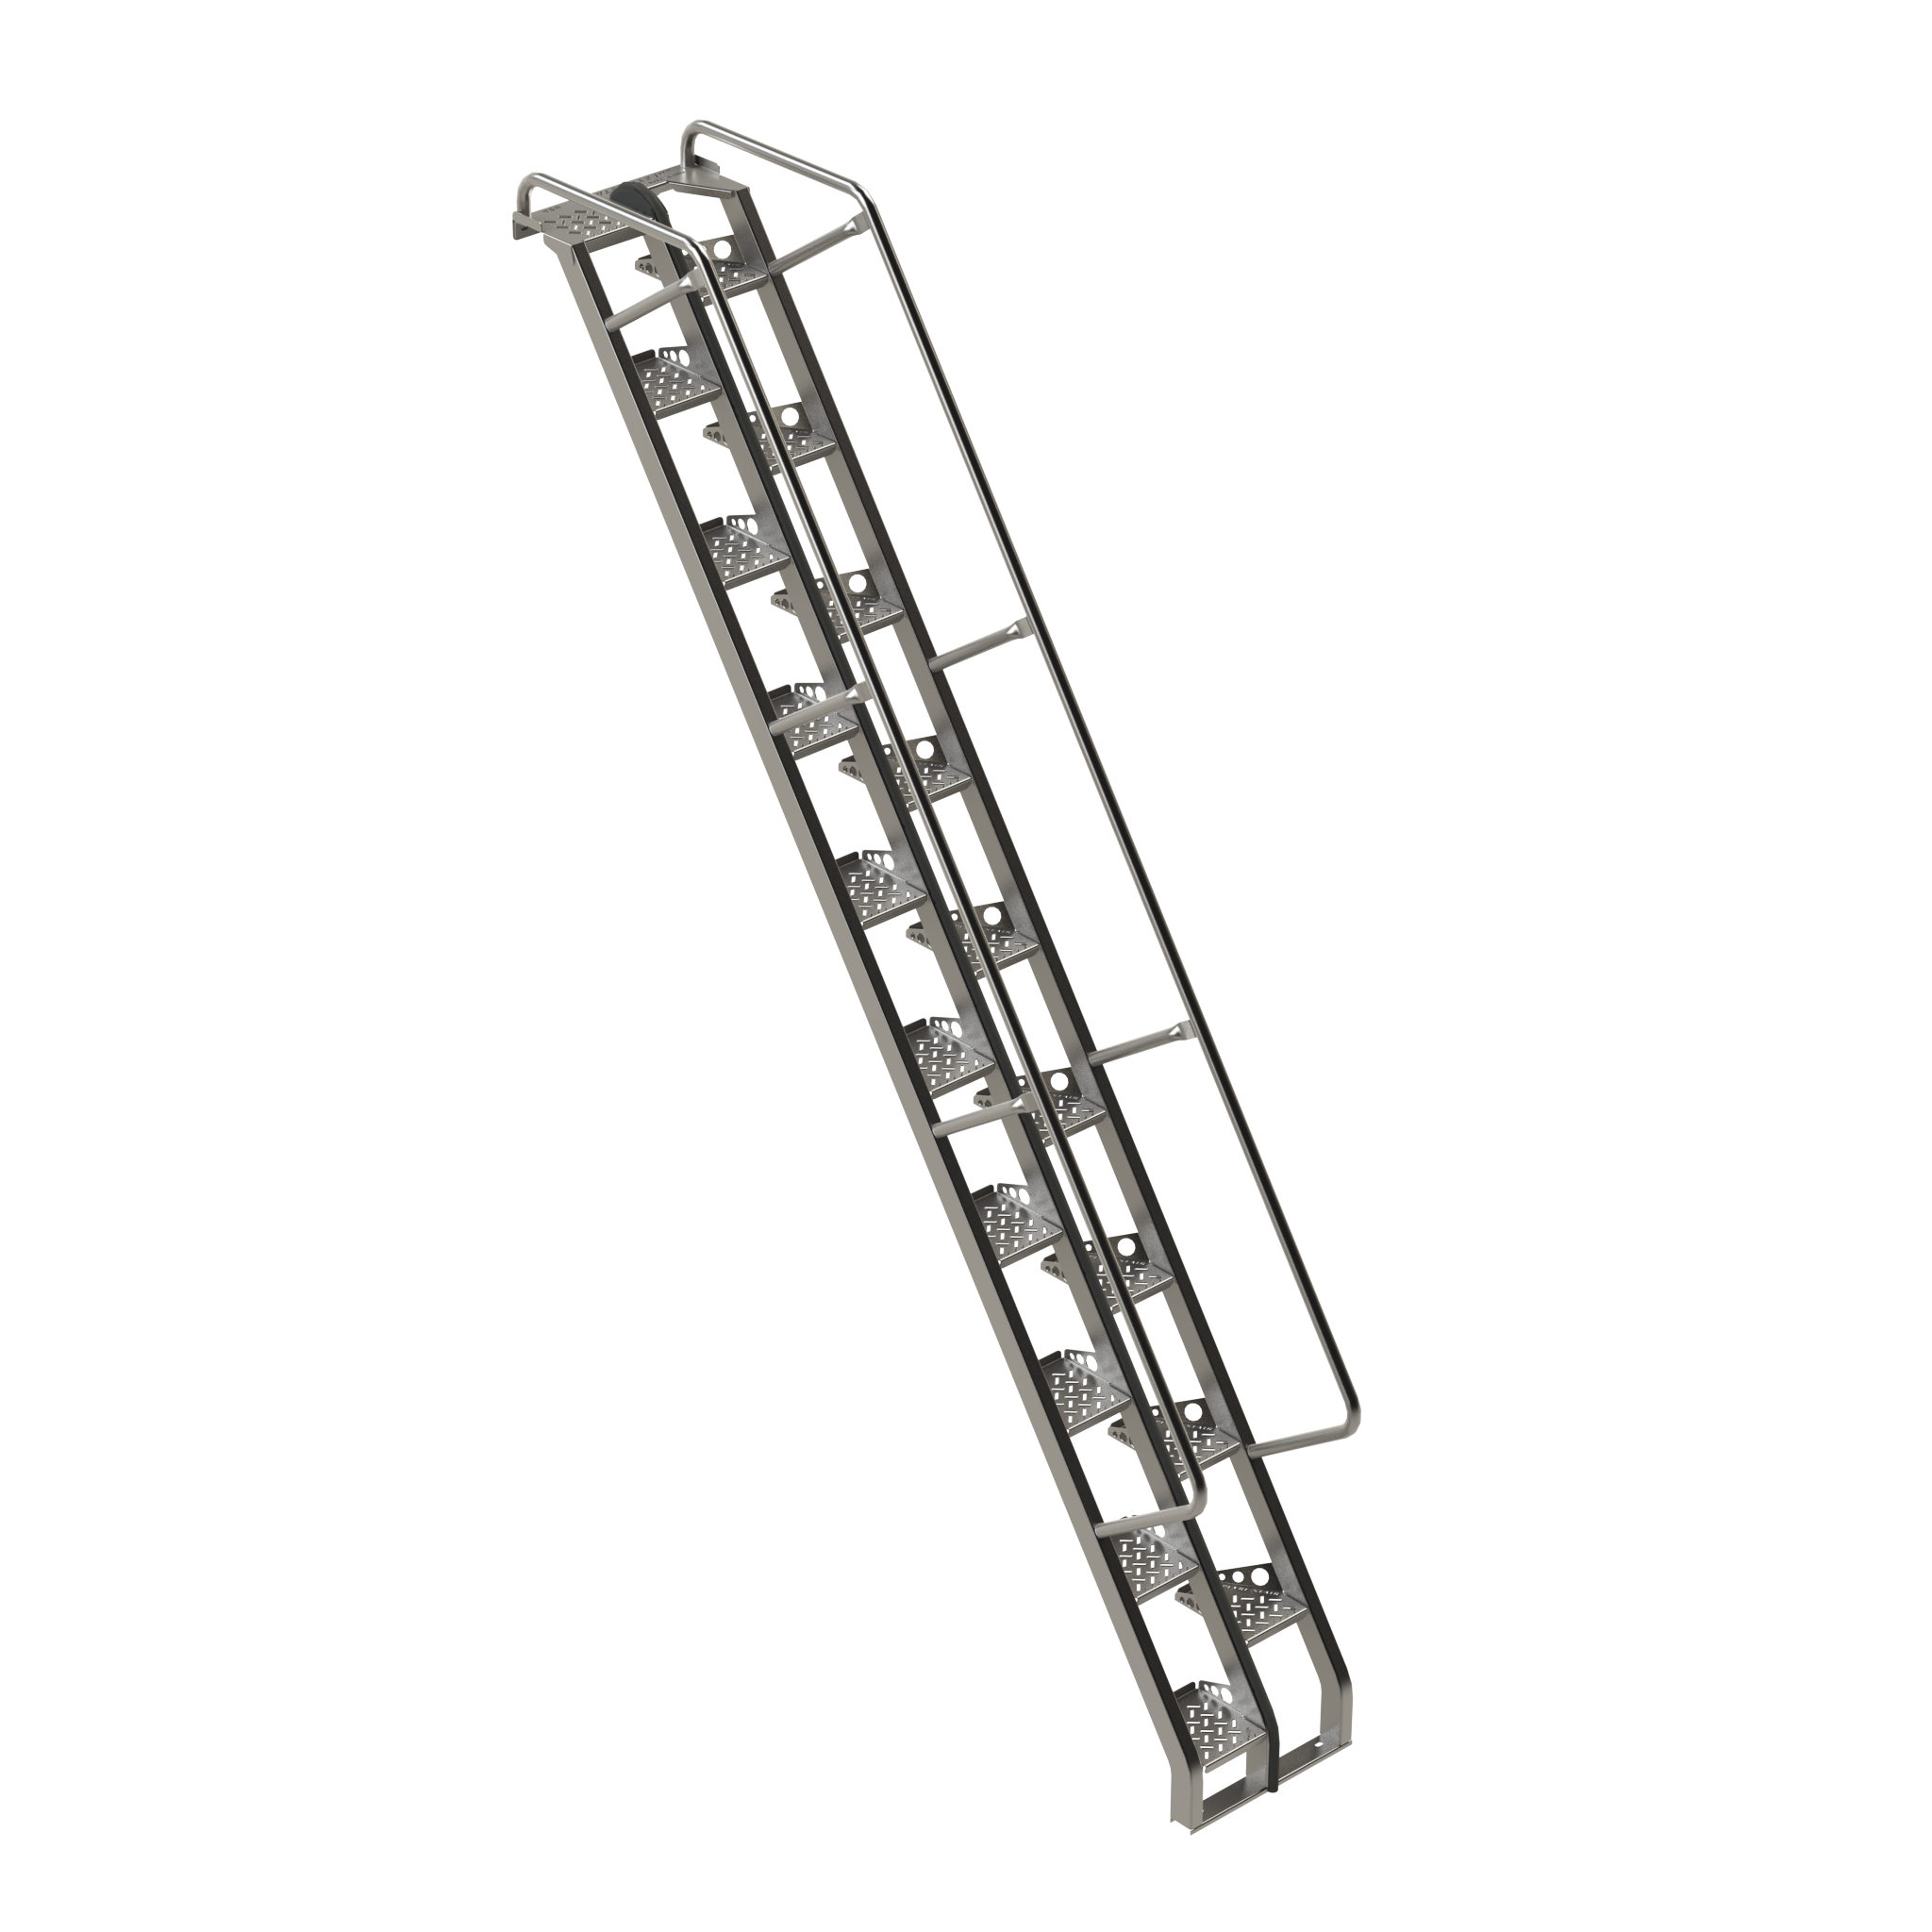 Alternating Tread Stair, Stainless Steel, 56 Degree, Optional Handrail